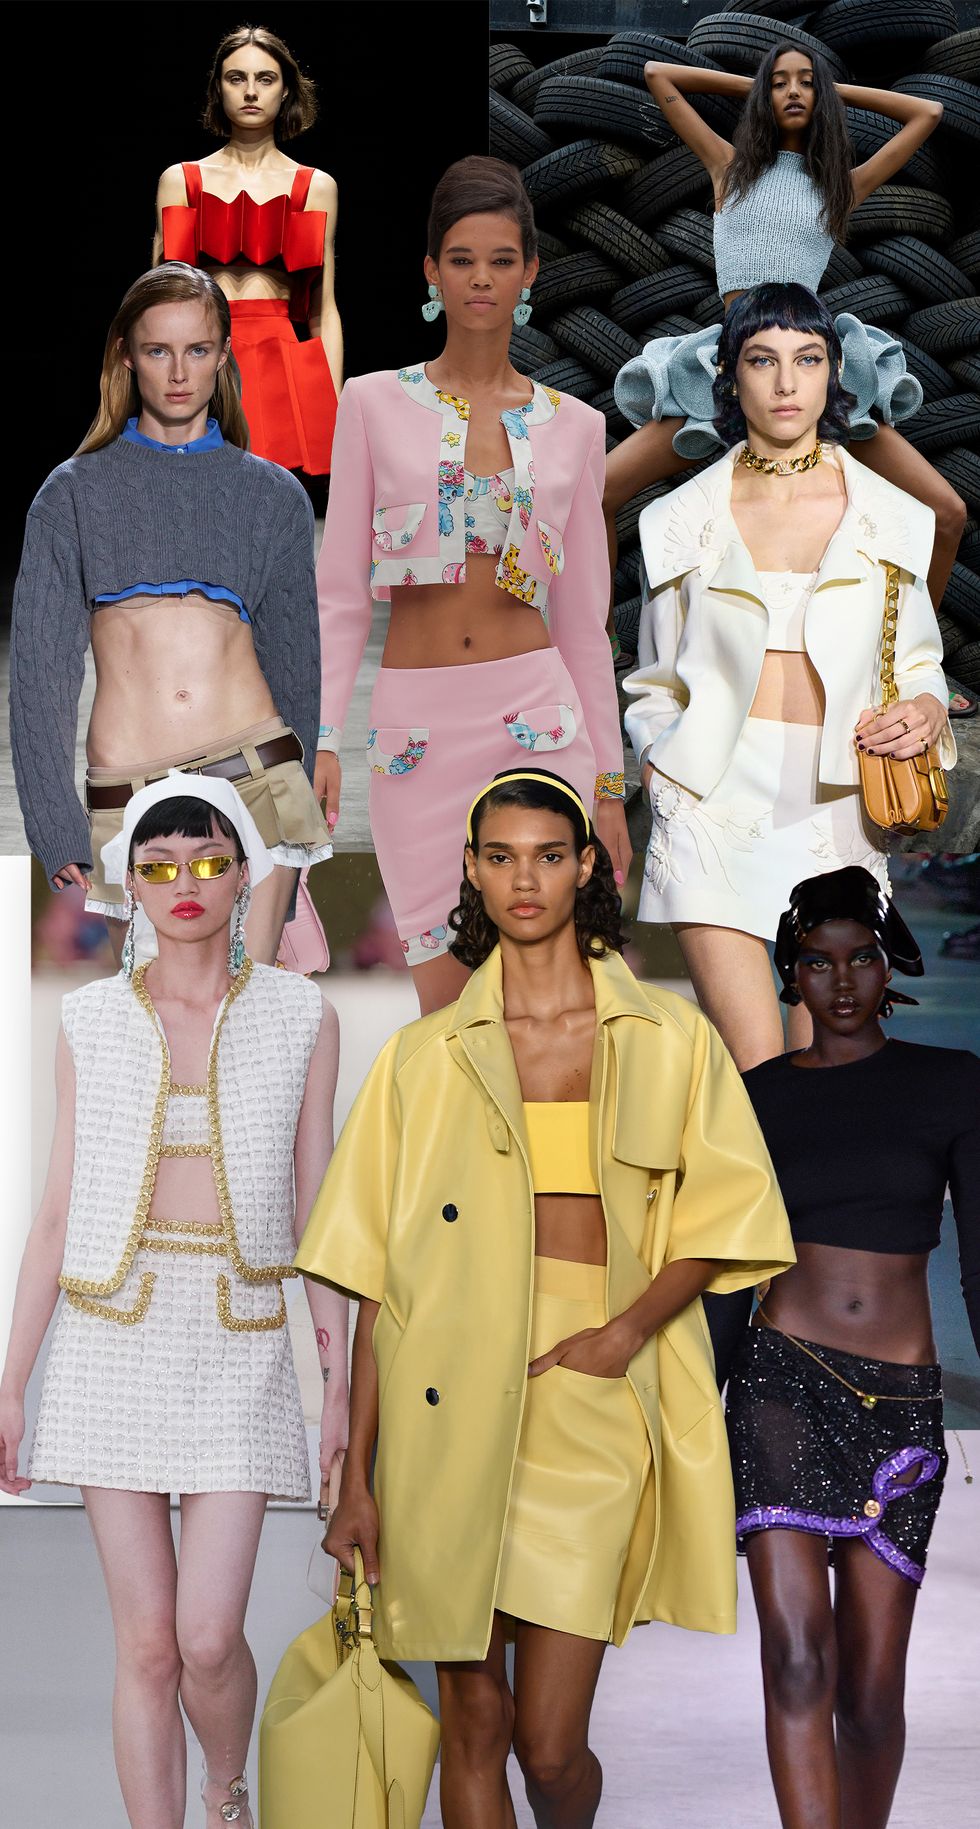 Fendi Men's Spring/Summer 2020 Runway Bag Collection - Spotted Fashion